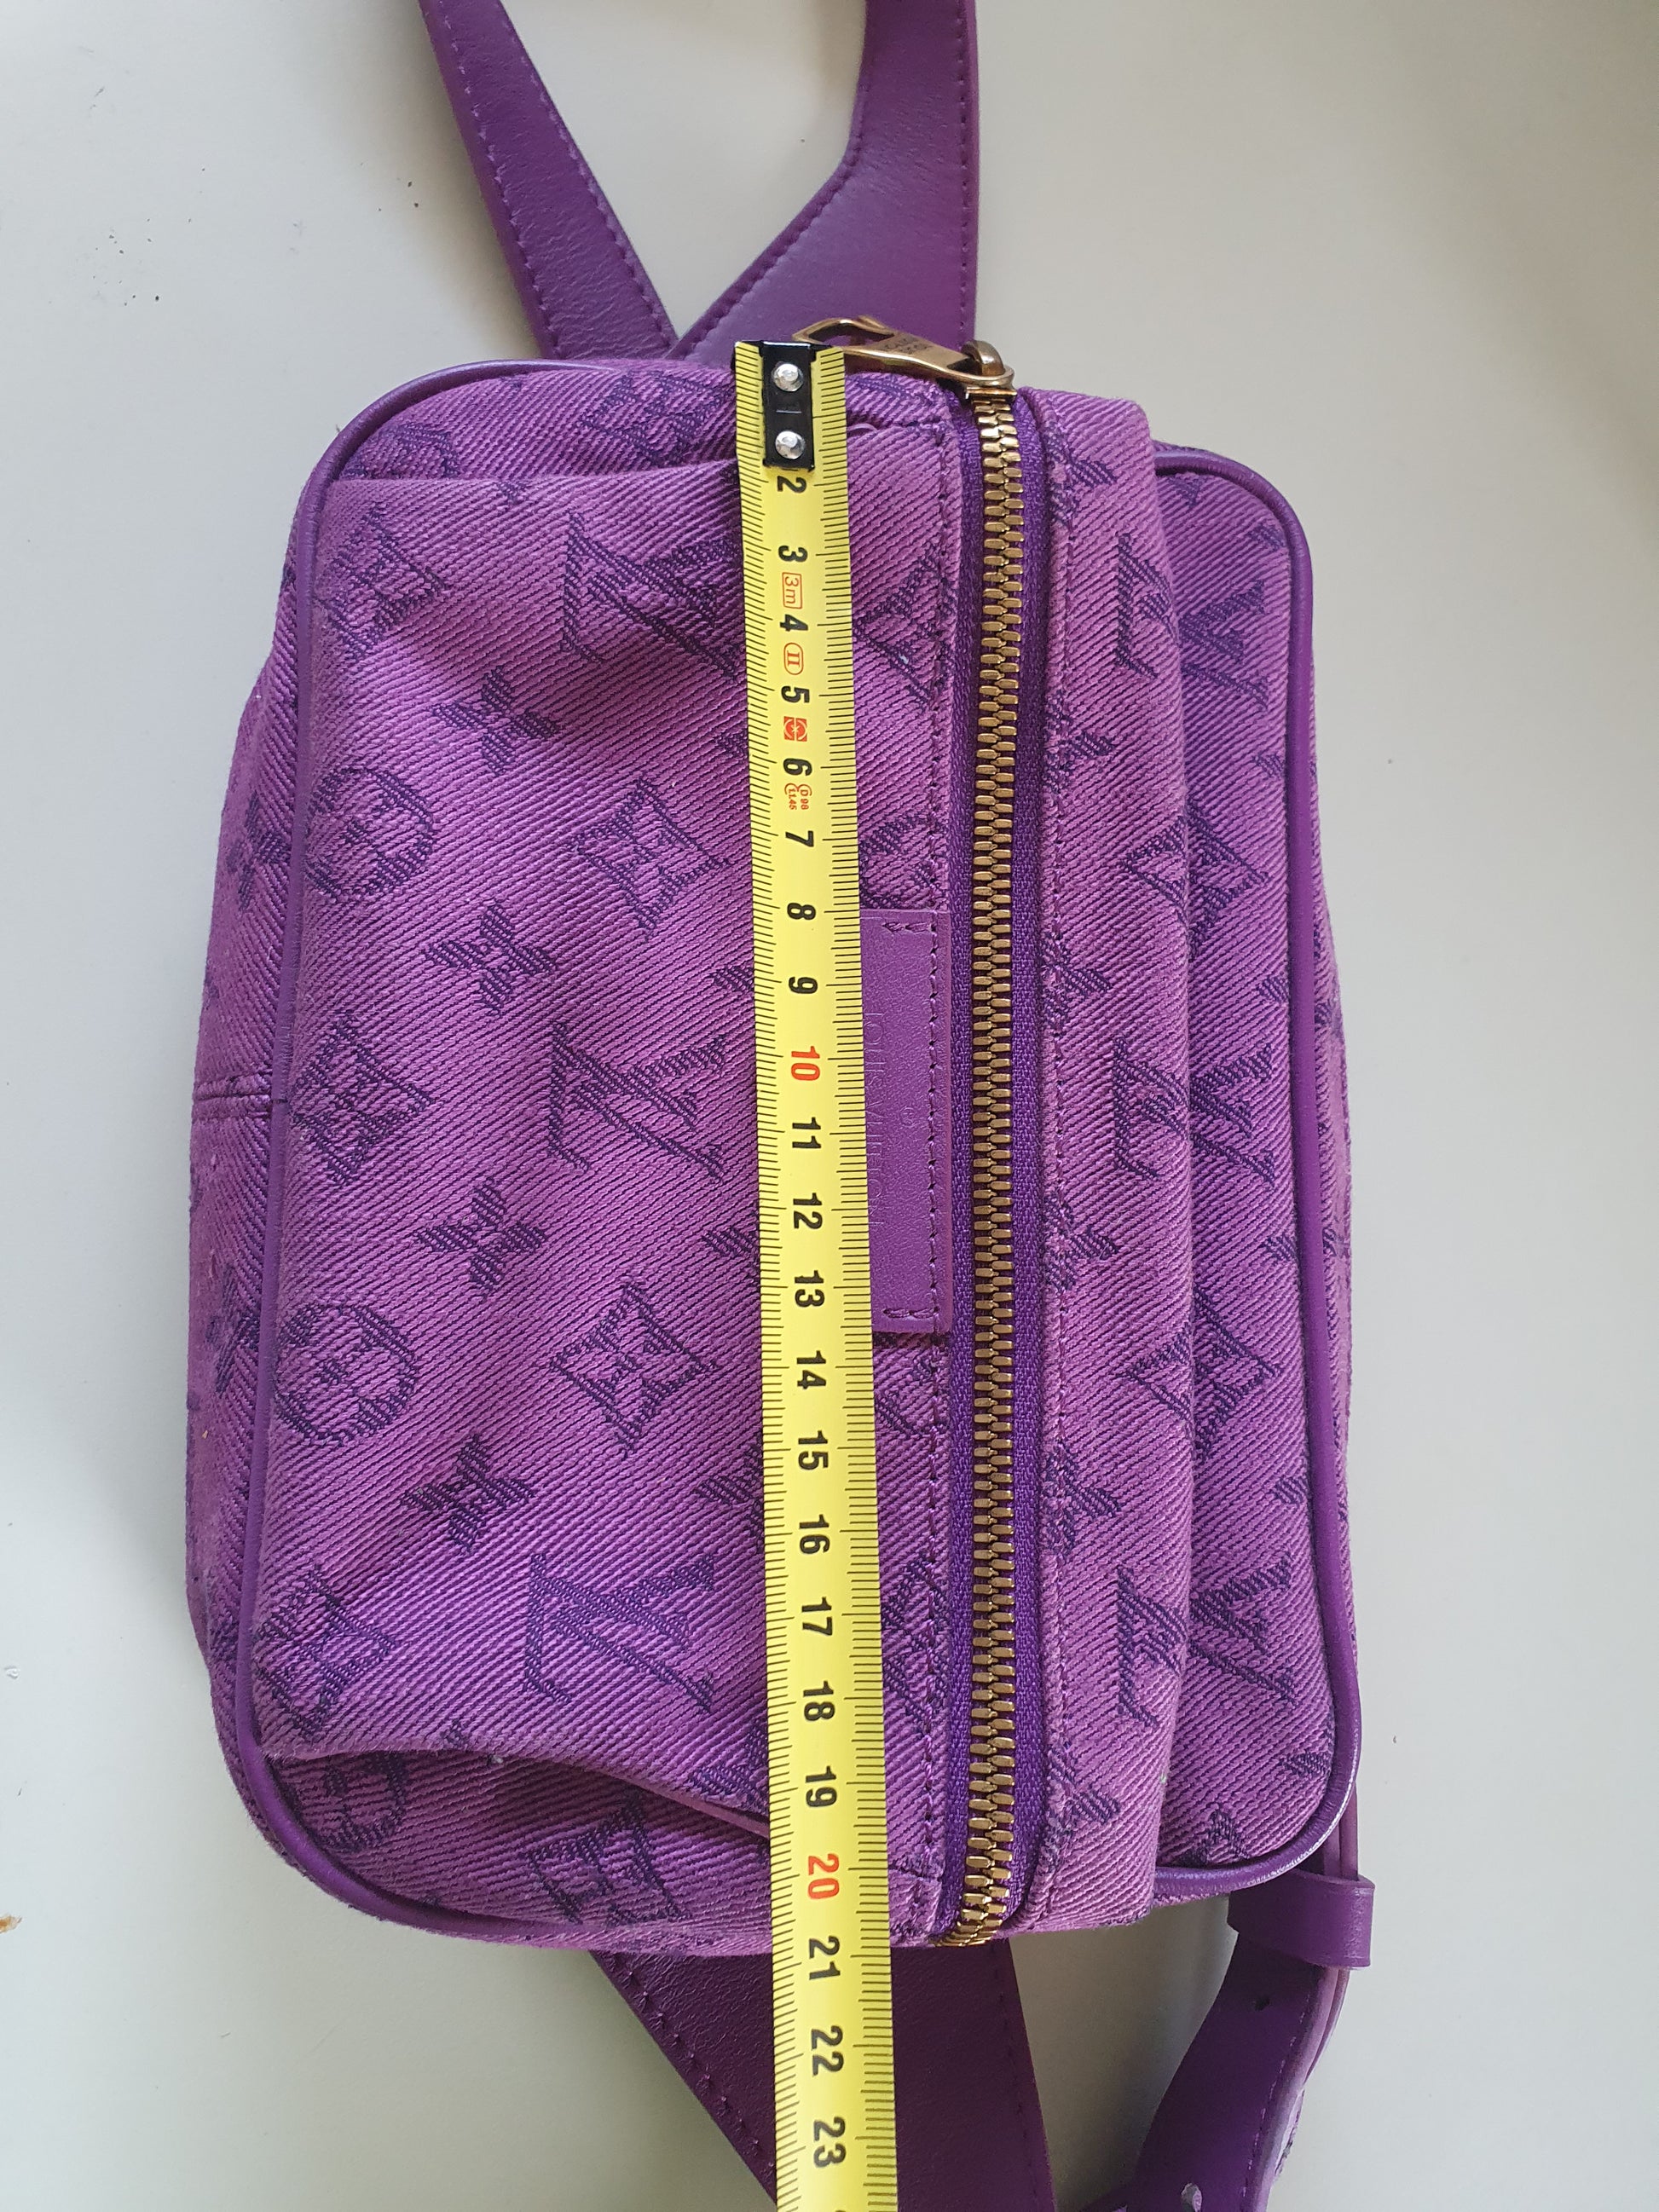 Louis Vuitton Denim Exterior Backpack Bags & Handbags for Women